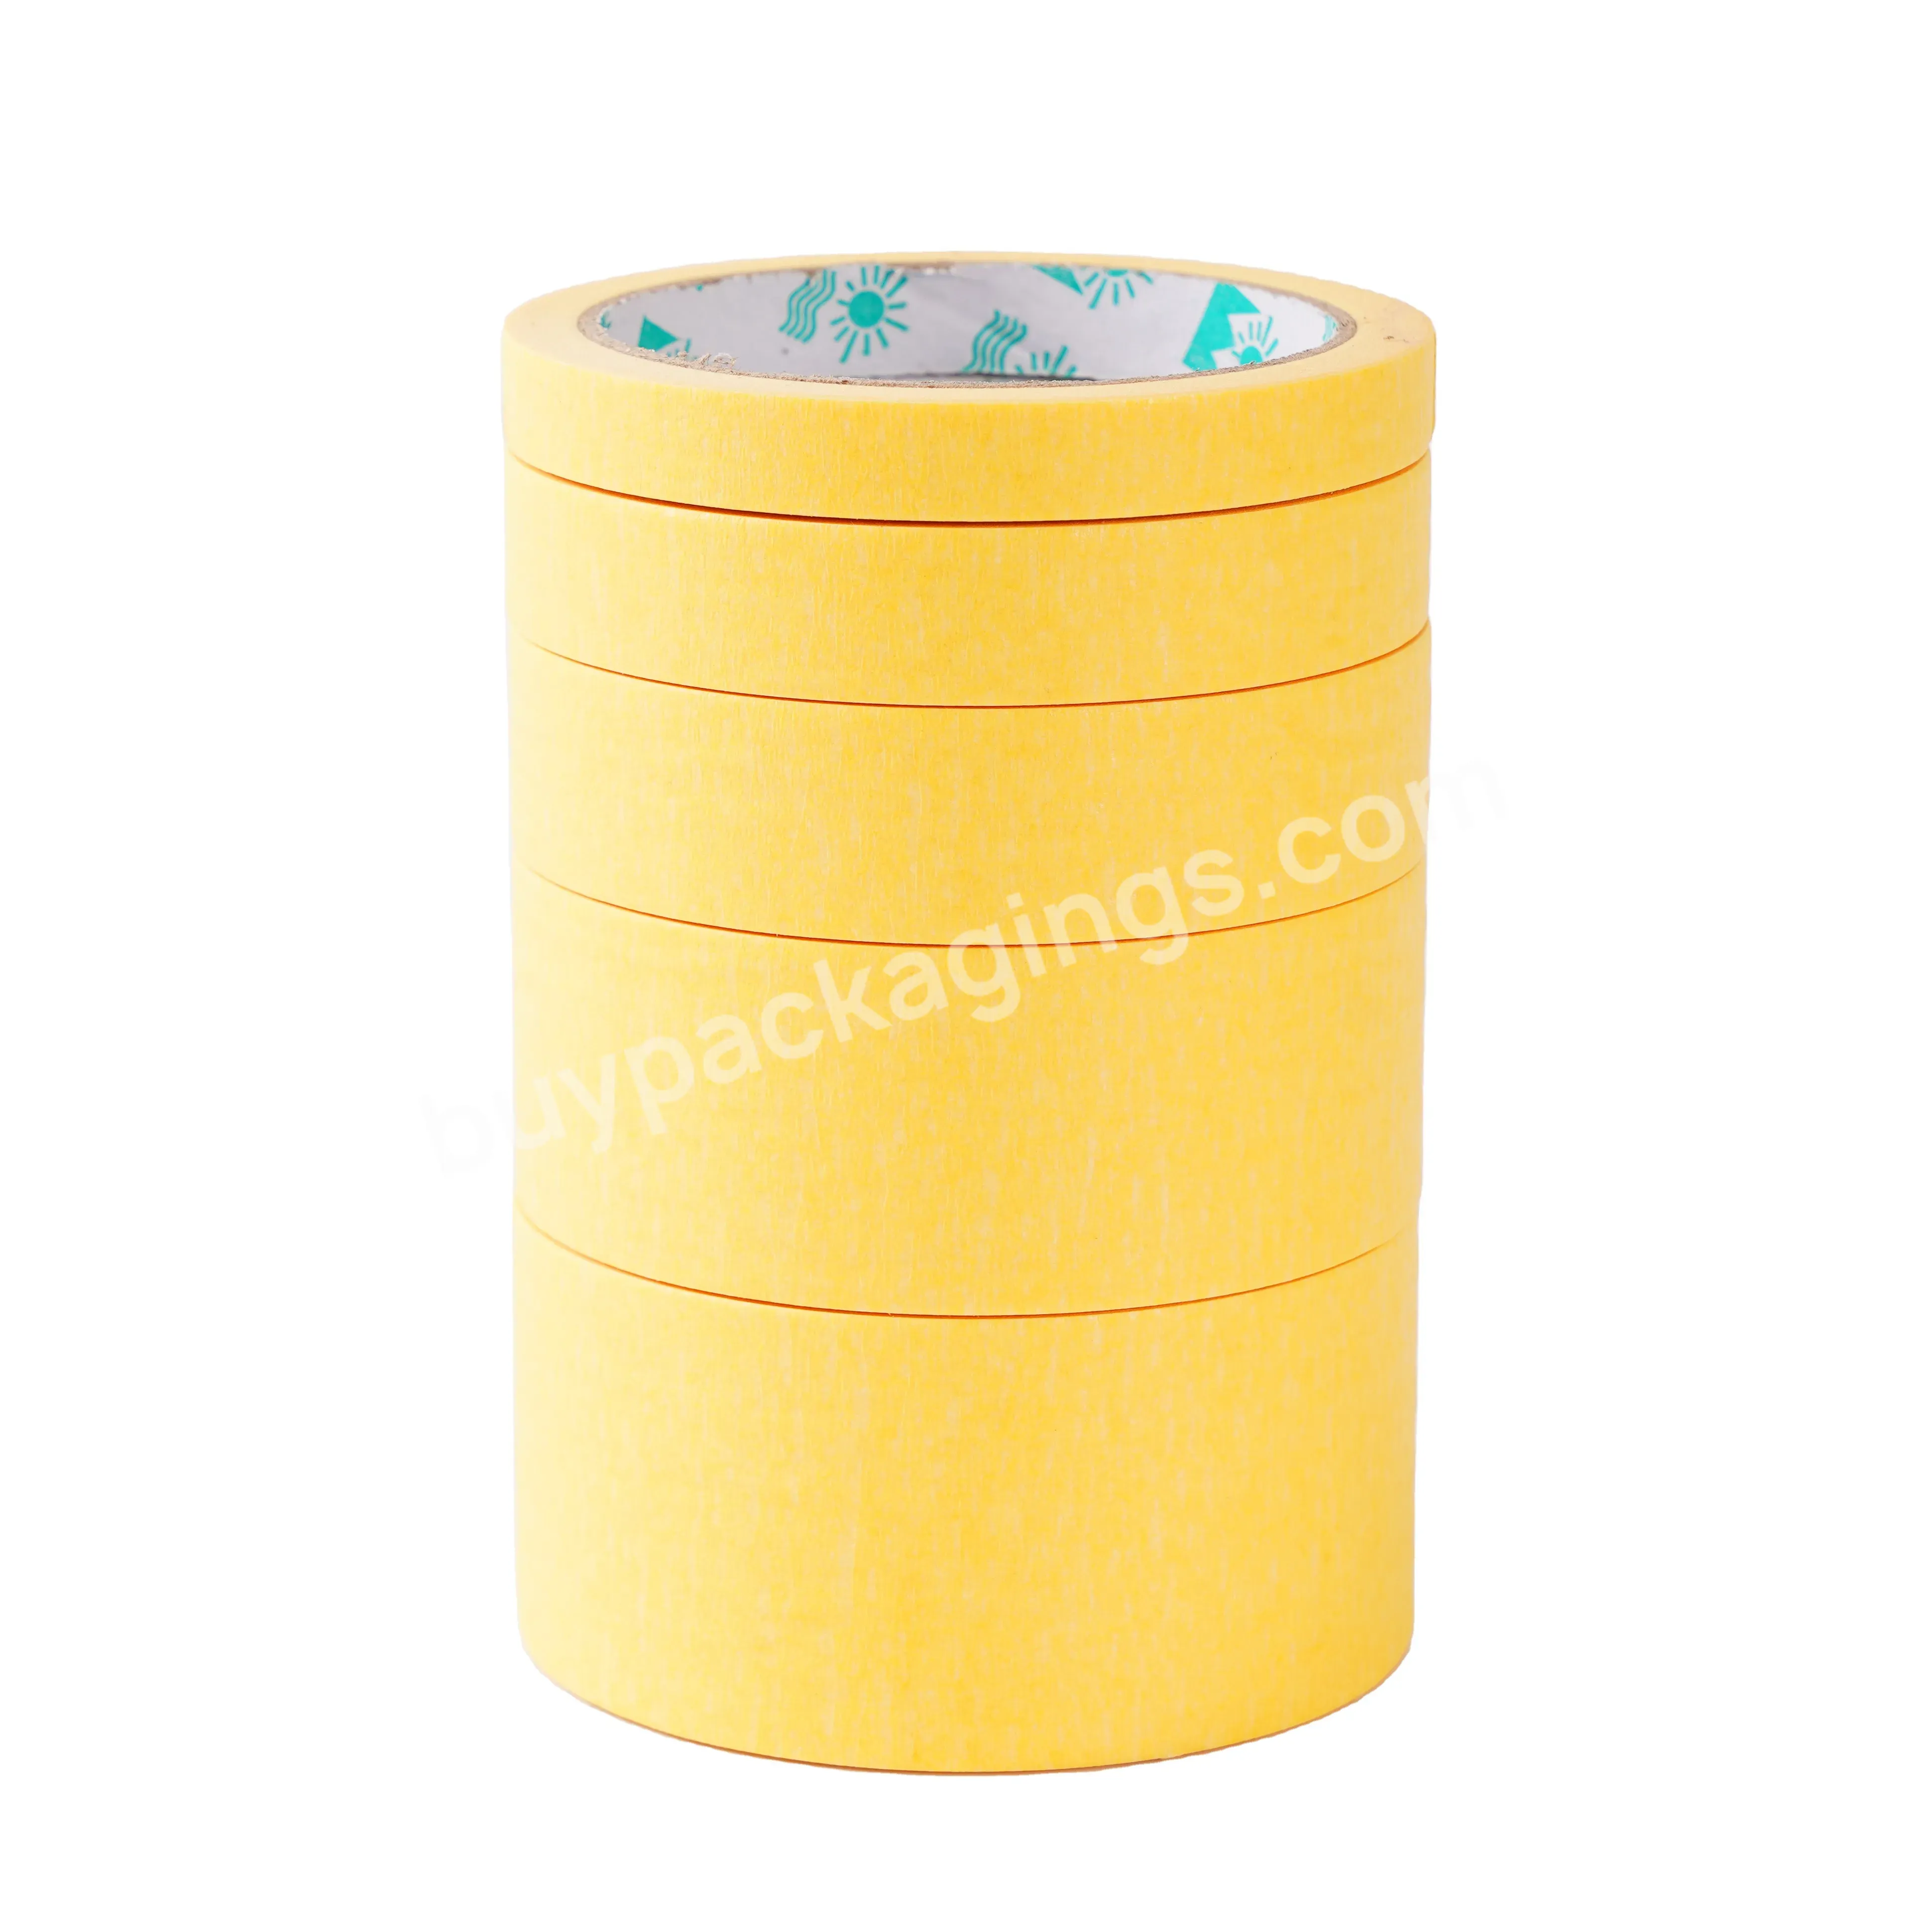 3m Masking Tape Promotional Masking Tape For Painting Yellow Crepe Paper Masking Tape - Buy 3m Masking Tape,Promotional Masking Tape For Painting,Masking Tape 3m Blue Masking Tape.